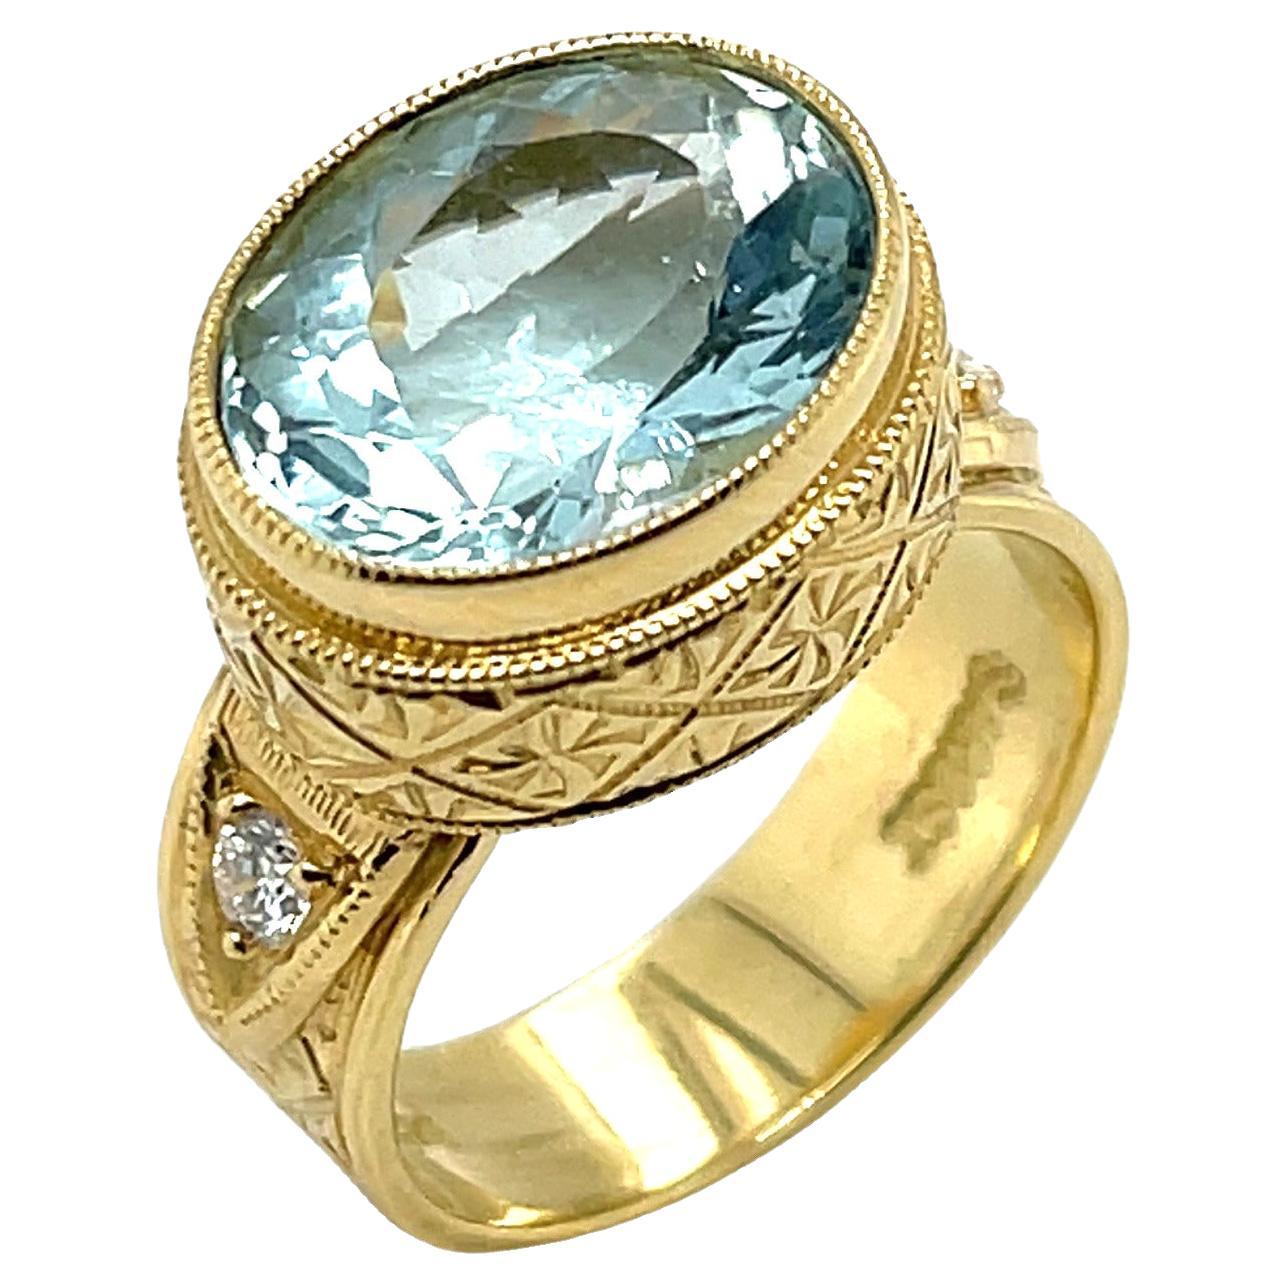 Aquamarine and Diamond Band Ring in 18k Yellow Gold, 5.17 Carats